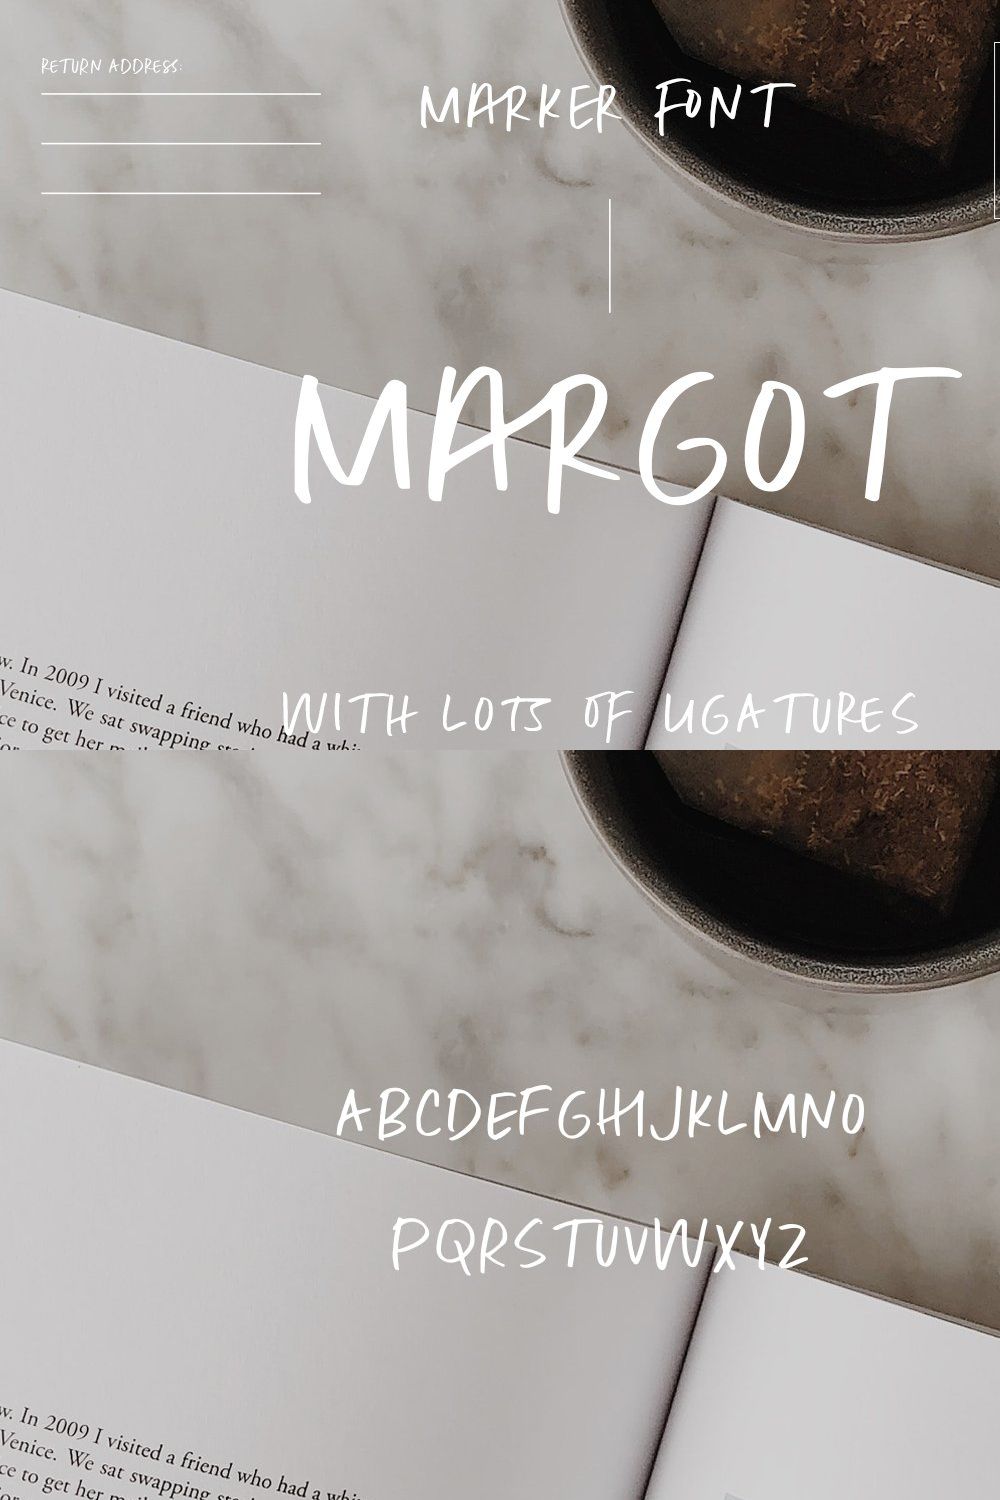 Margot Marker Font pinterest preview image.